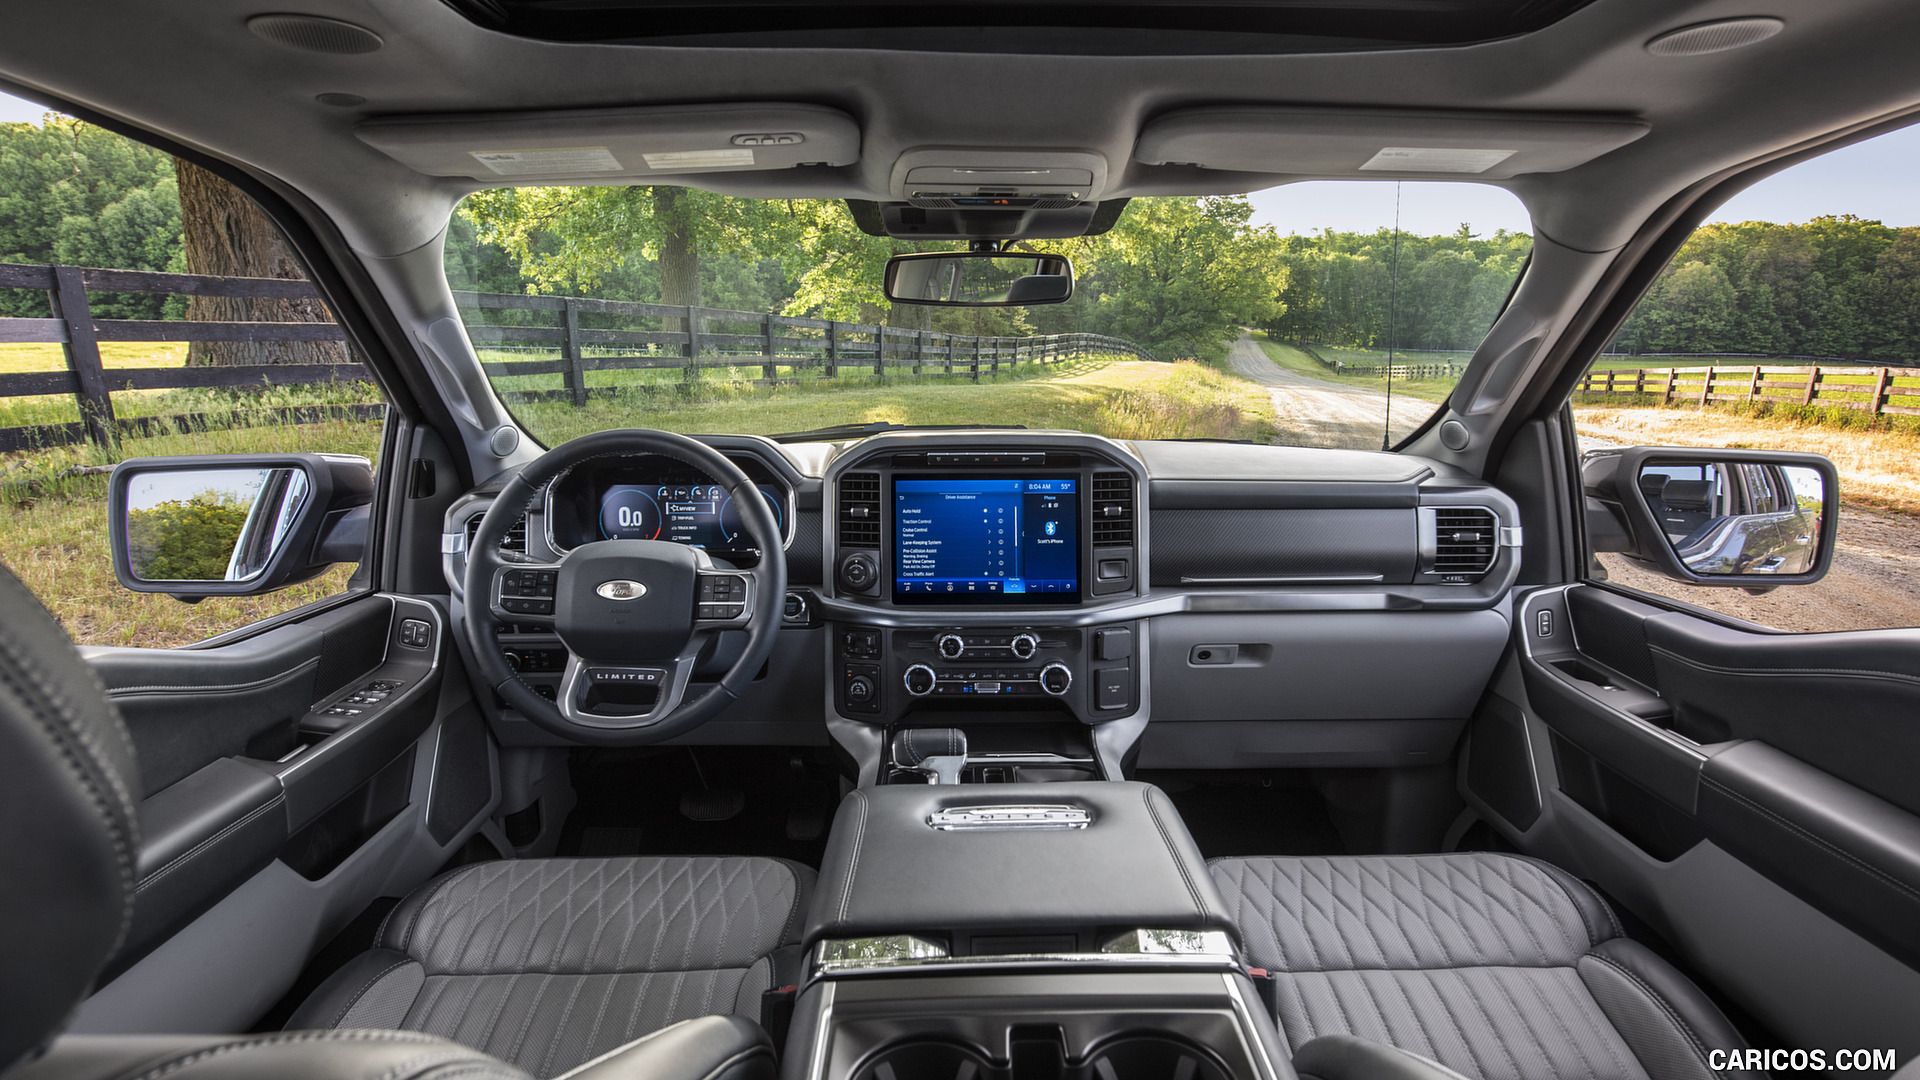 2021 Ford F-150 interior dashboard layout